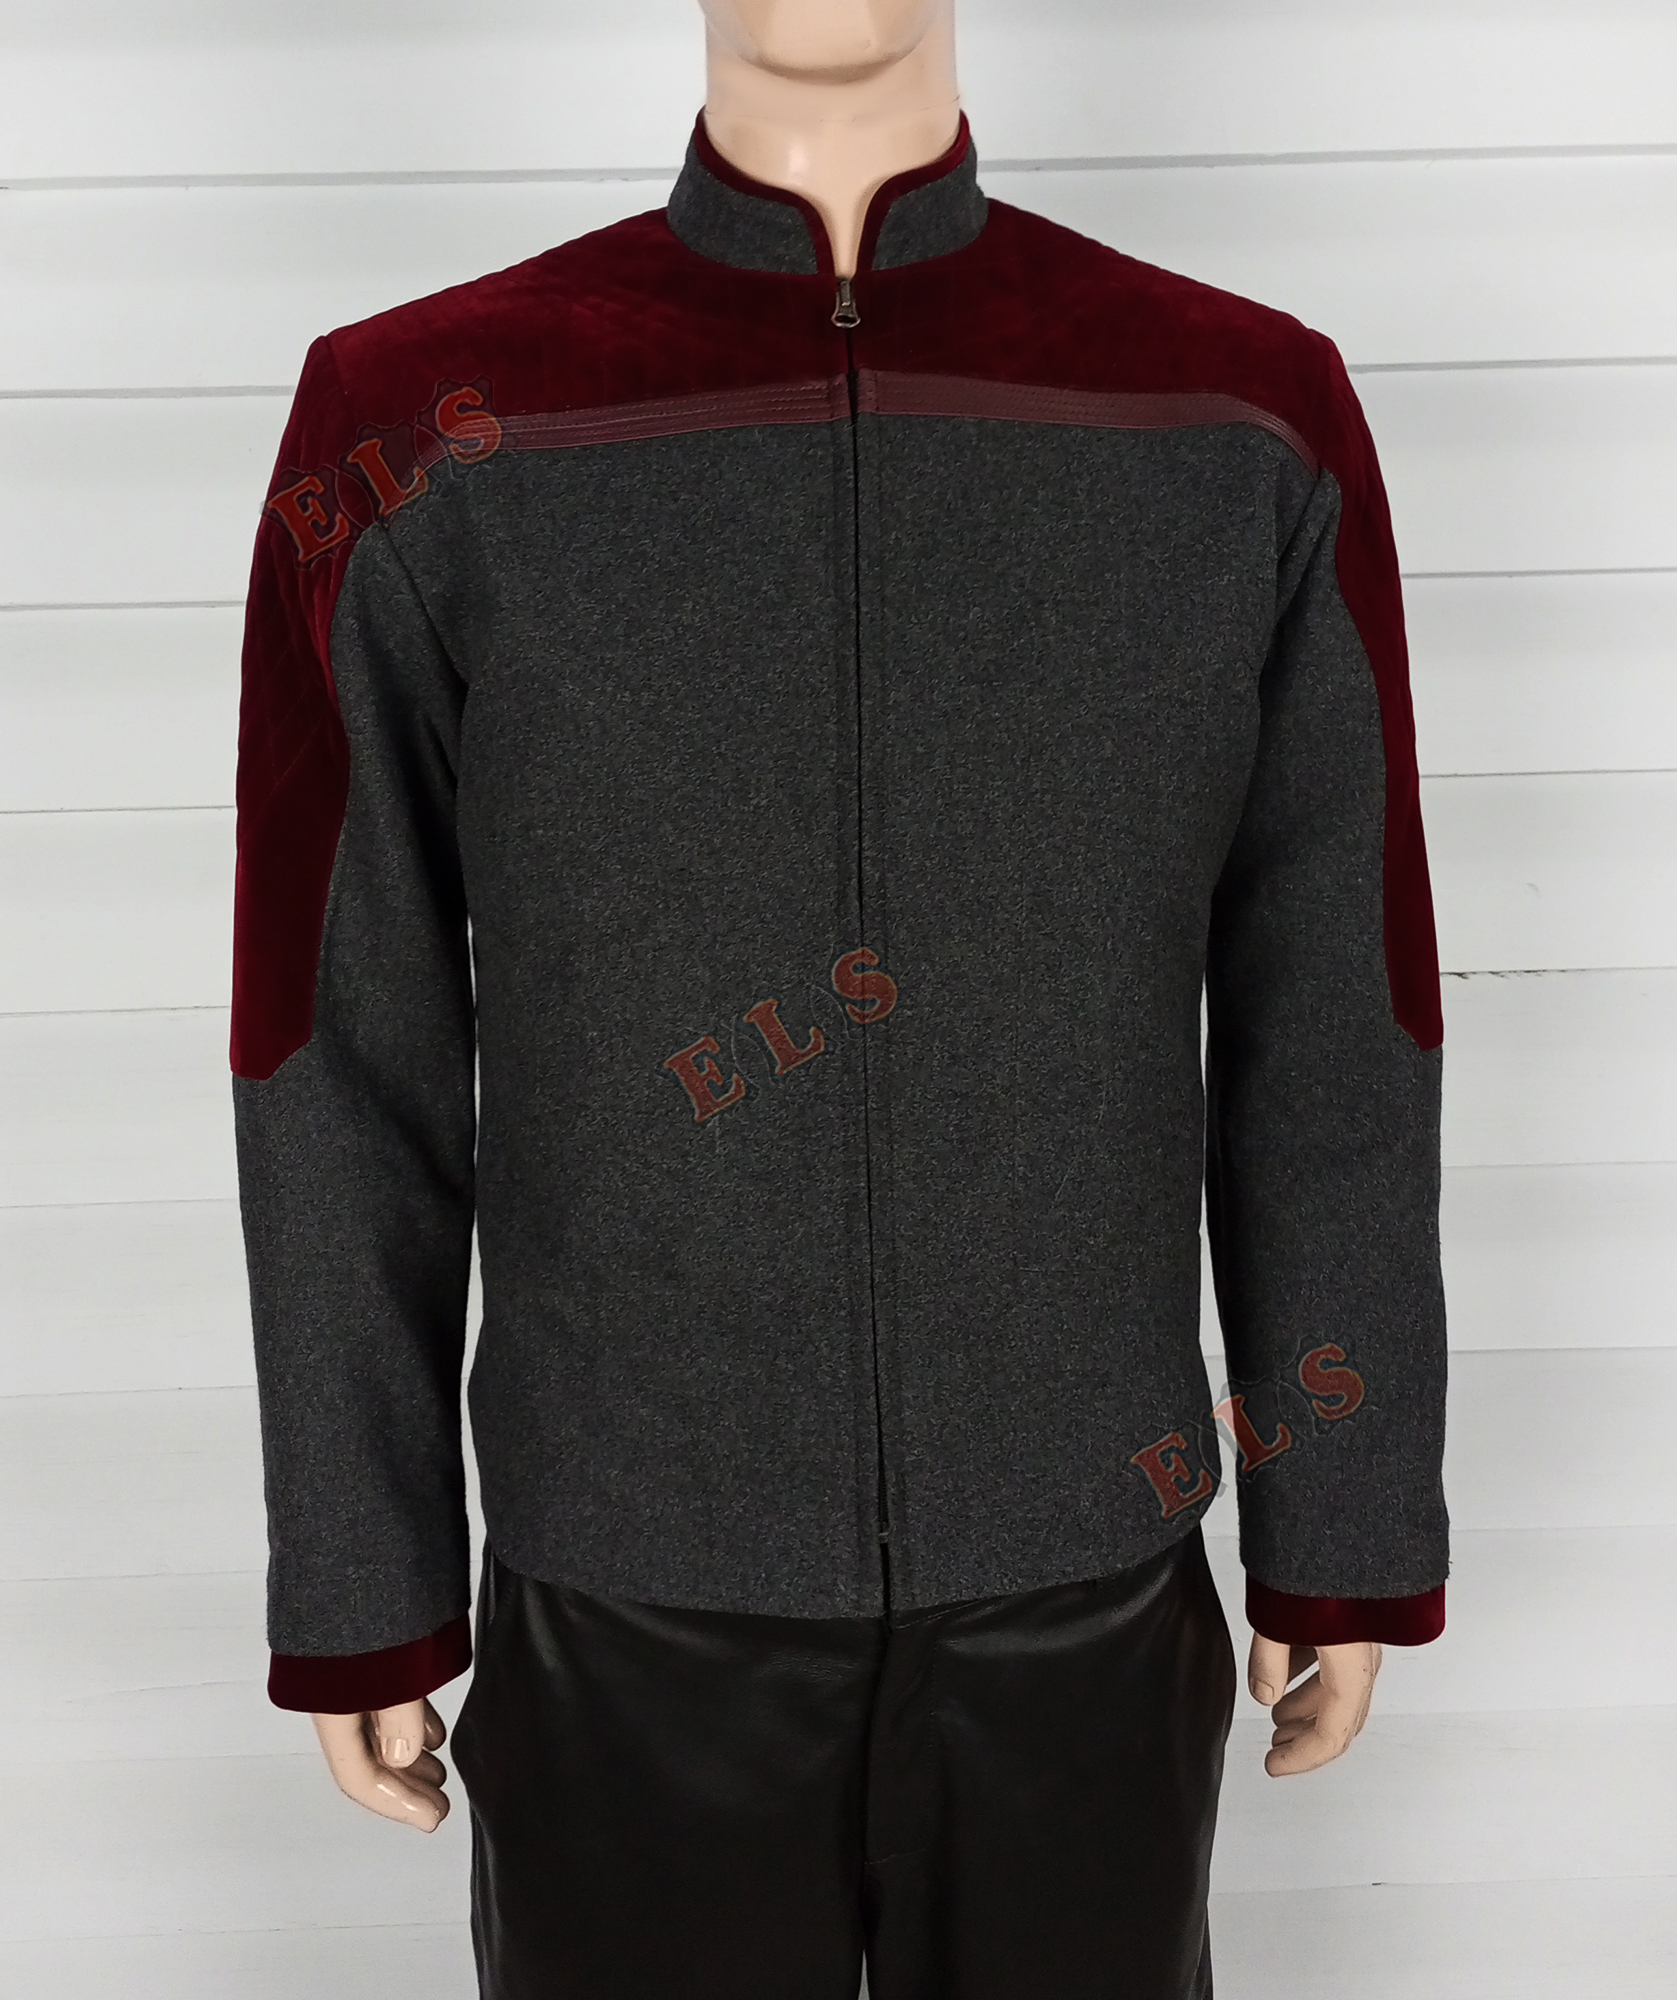 Riker Uniform jacket 1.jpg